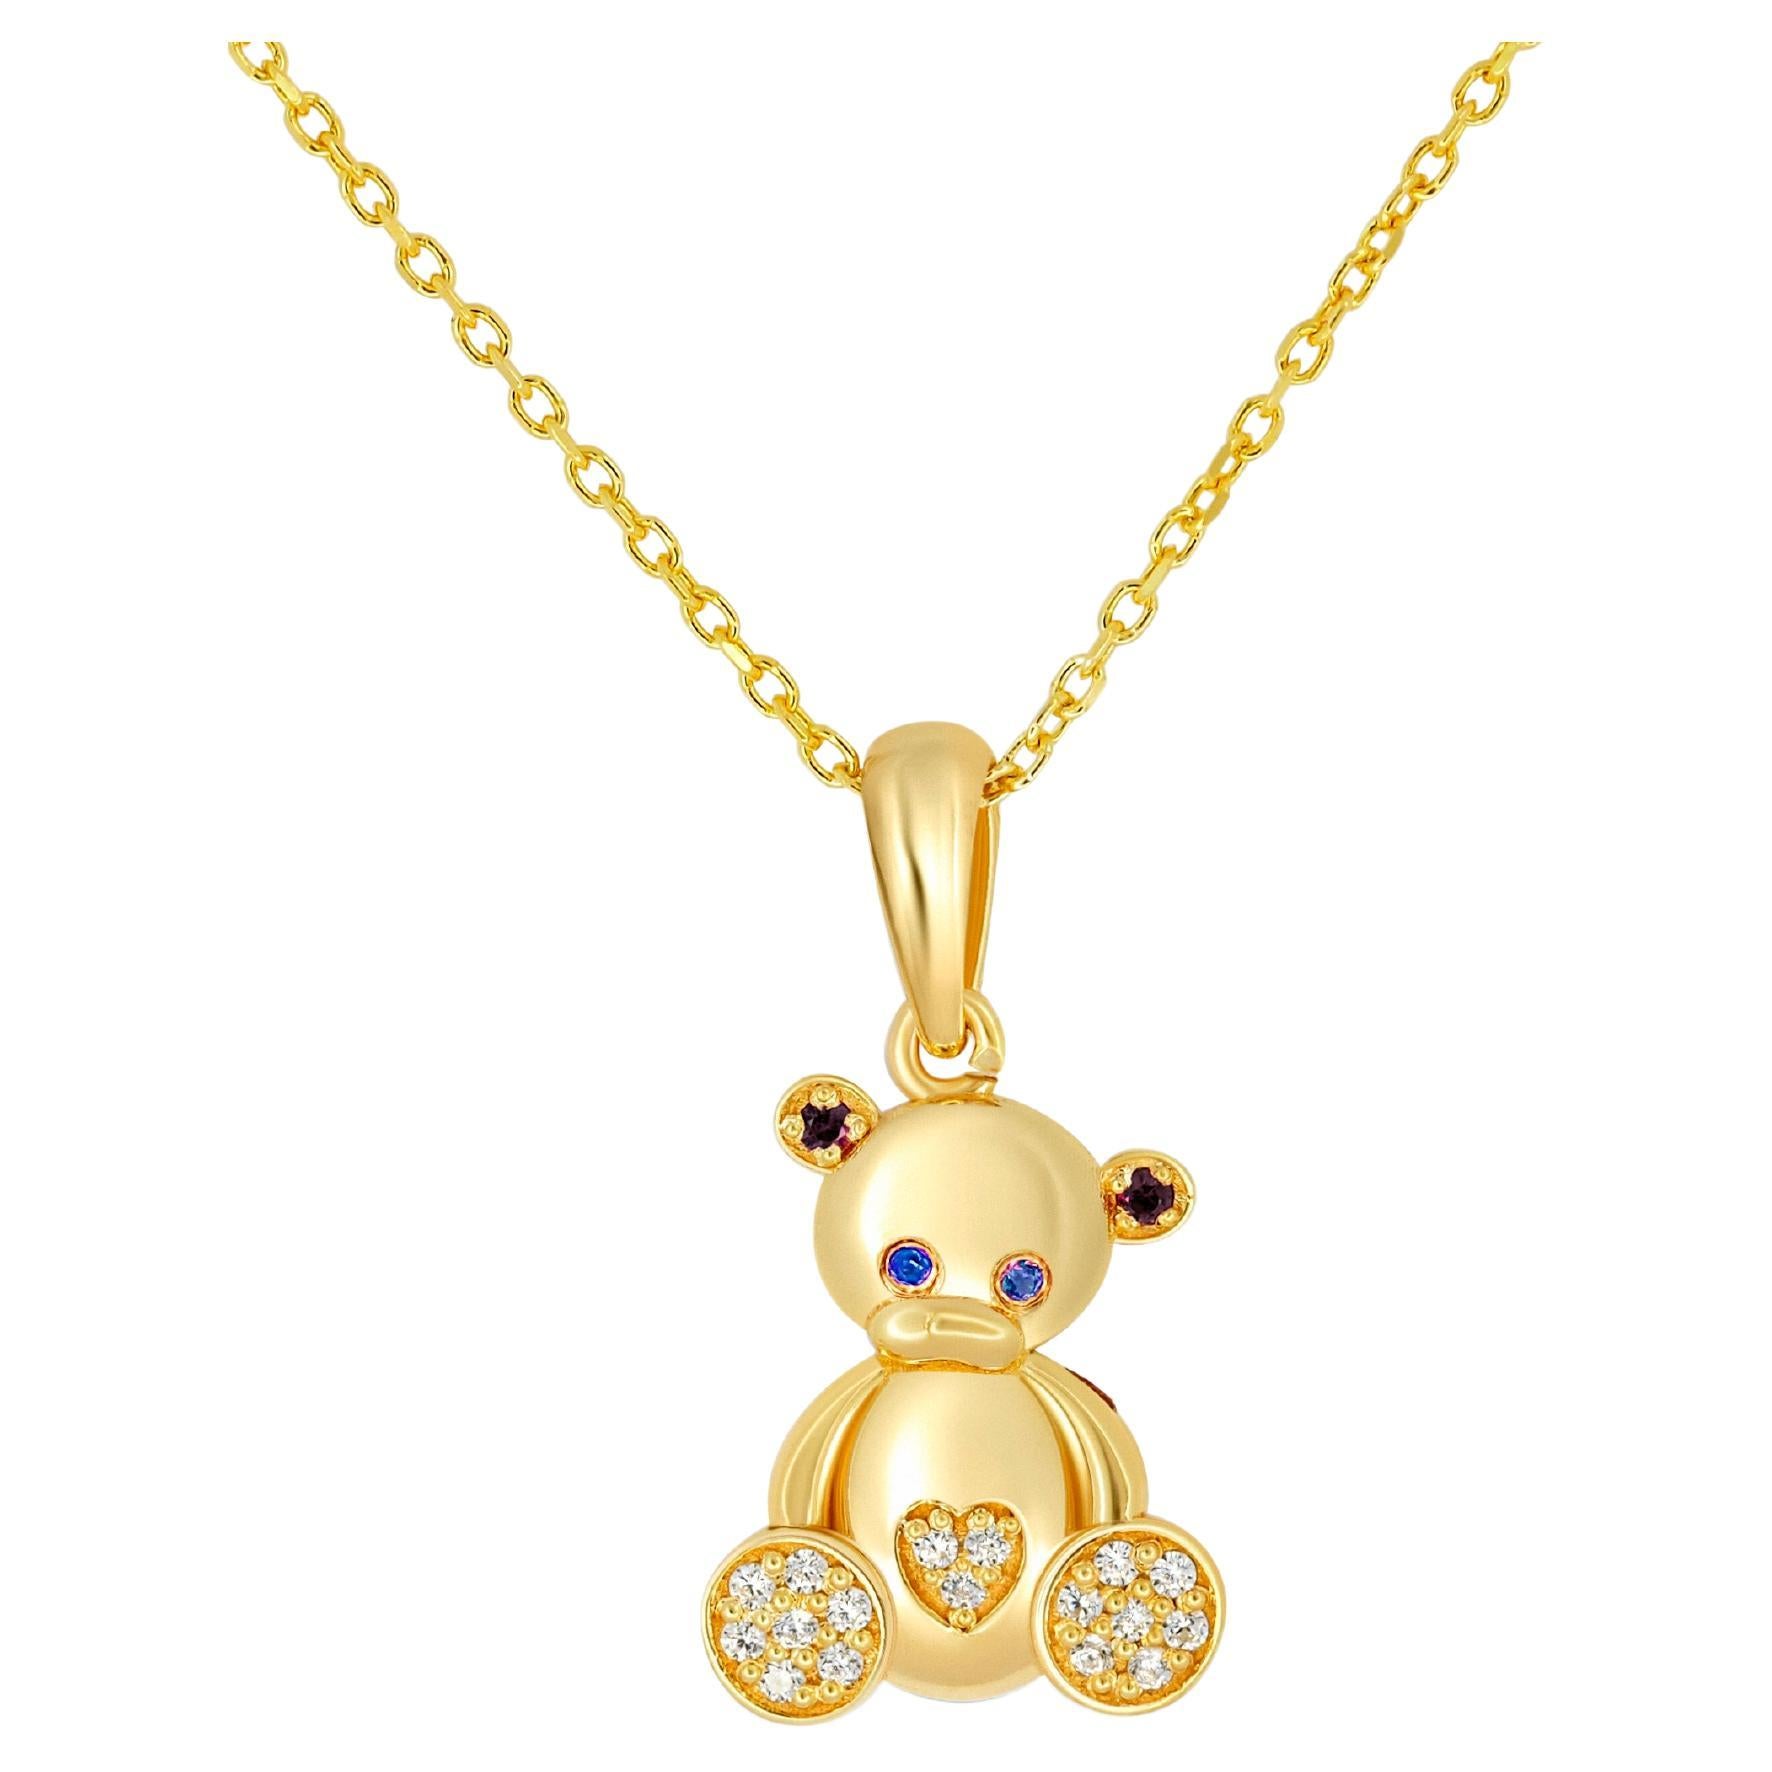 Teddy bear pendant in 14k gold. For Sale